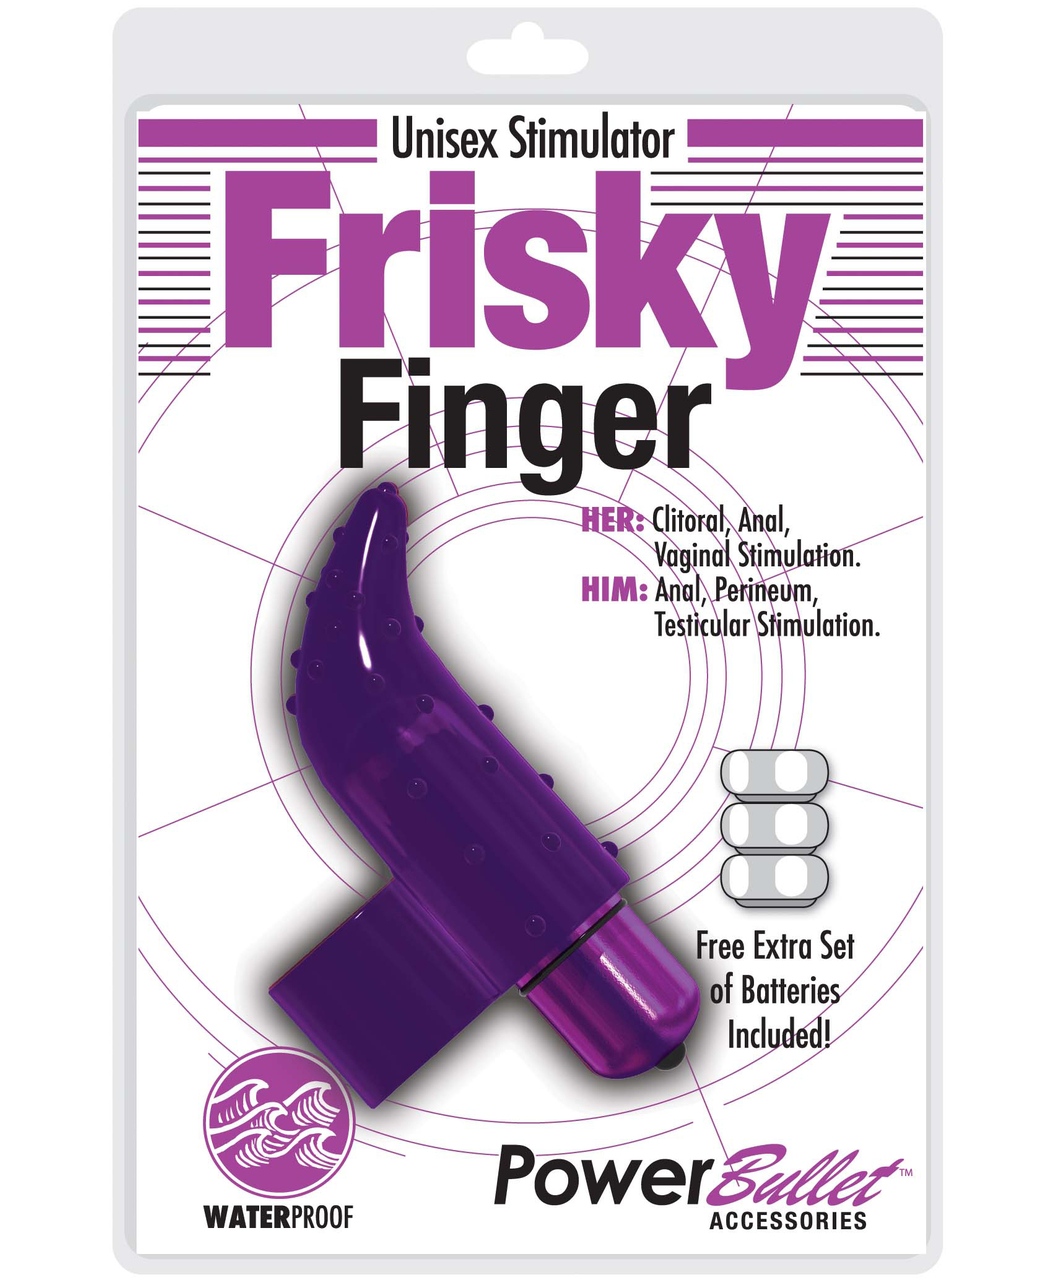 PowerBullet Frisky Finger minivibrators